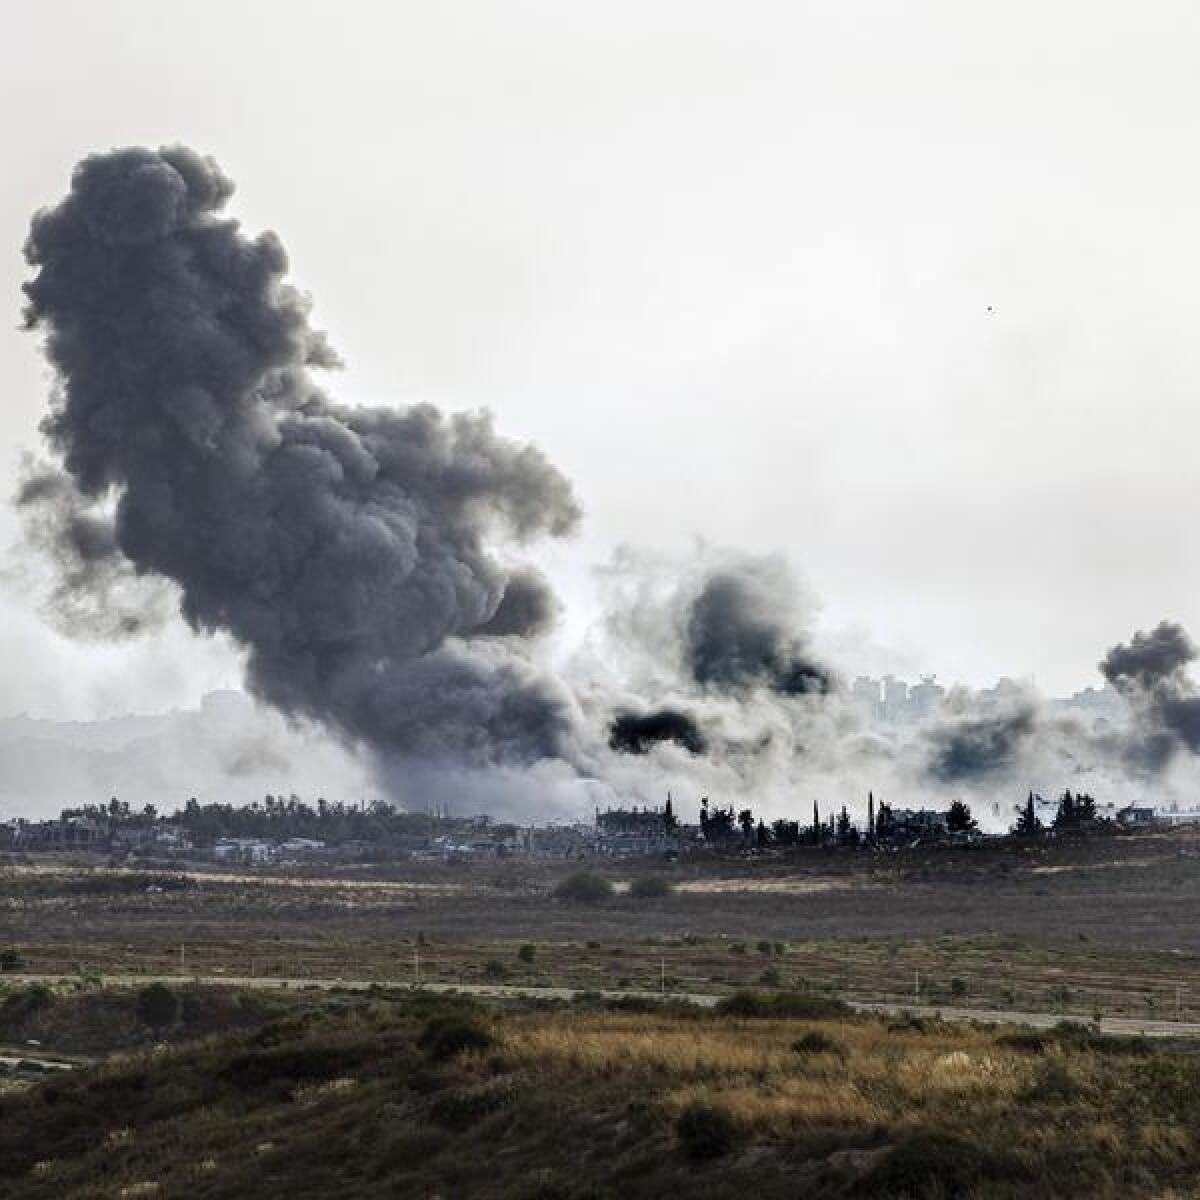 Smoke rises following an Israeli air strike in the Gaza Strip